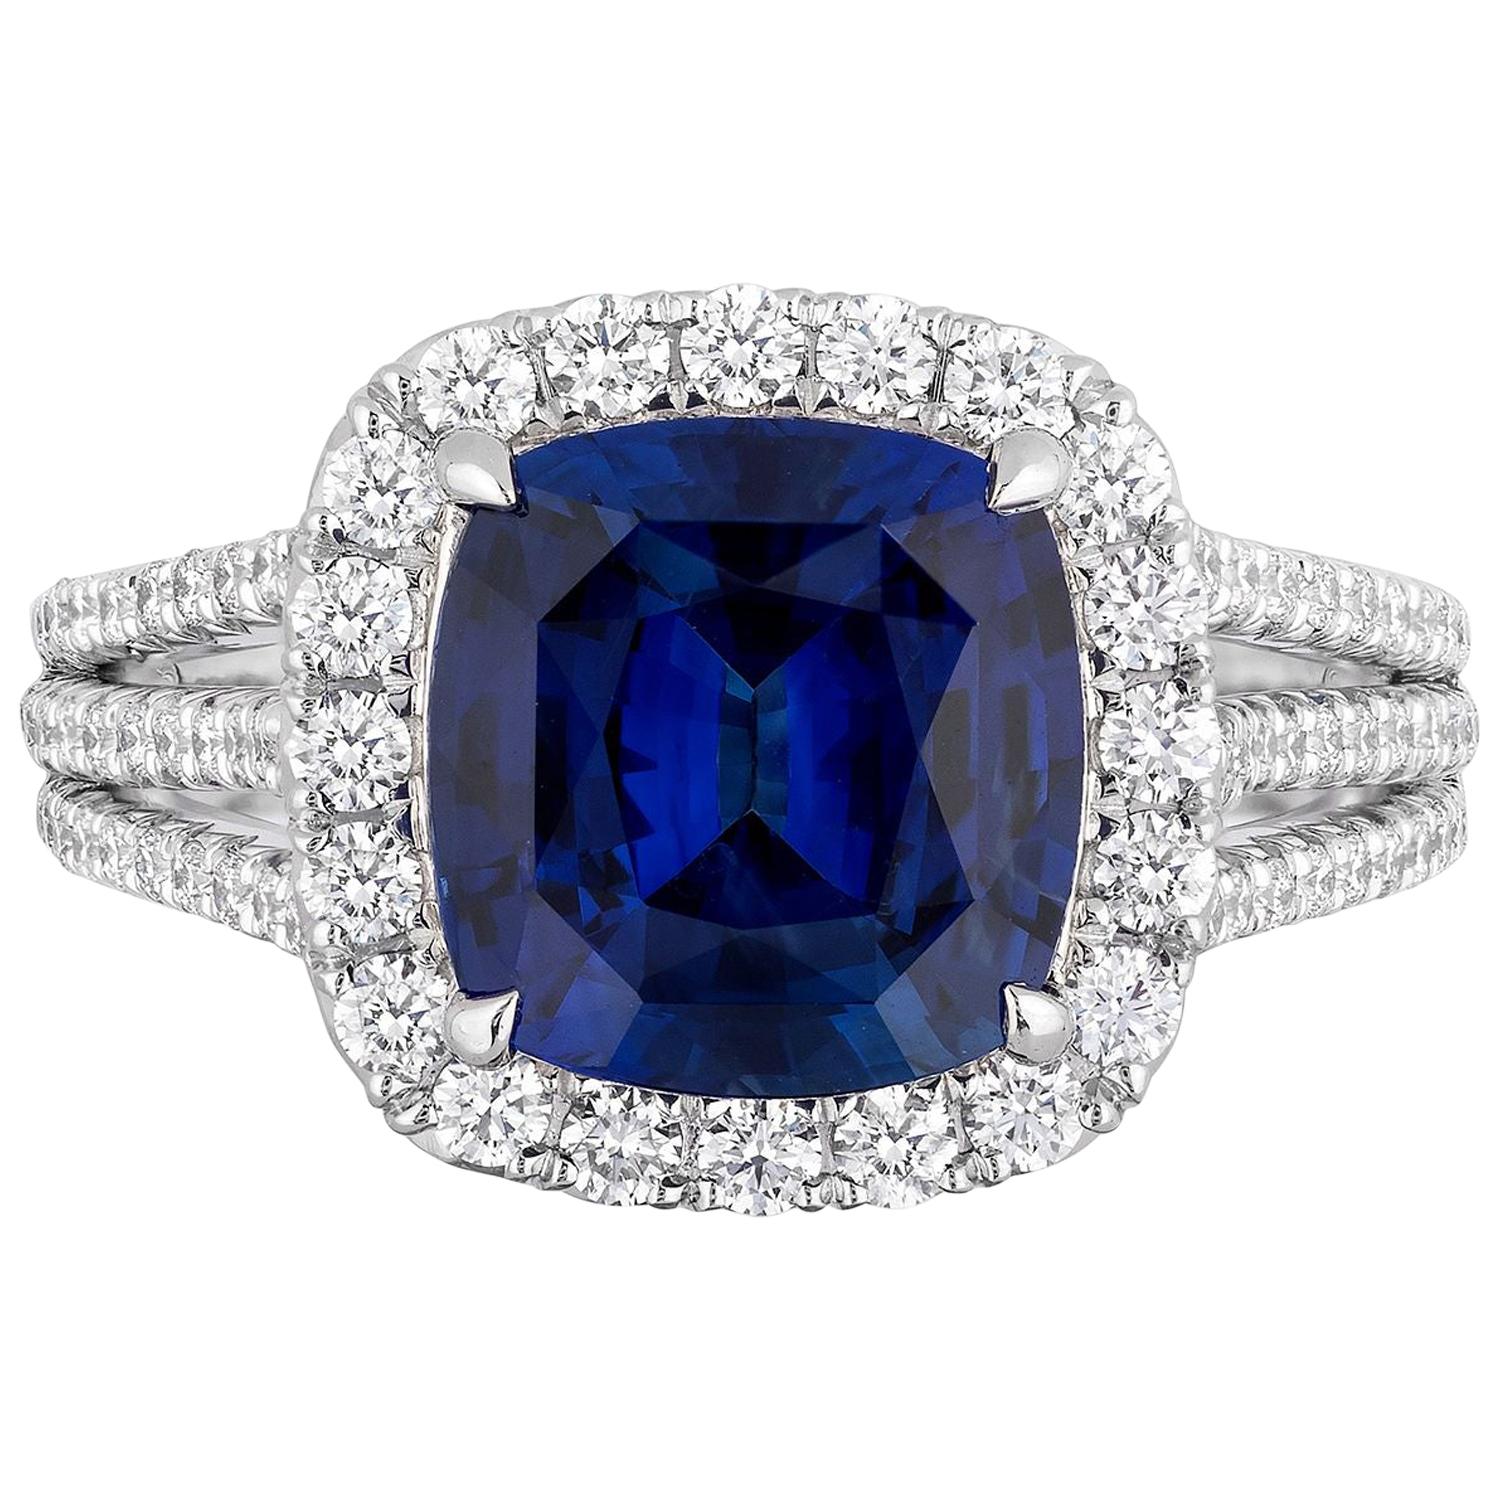 CDC LAB Certified 4.11 Carat Cushion Royal Blue Sapphire Diamond Cocktail Ring